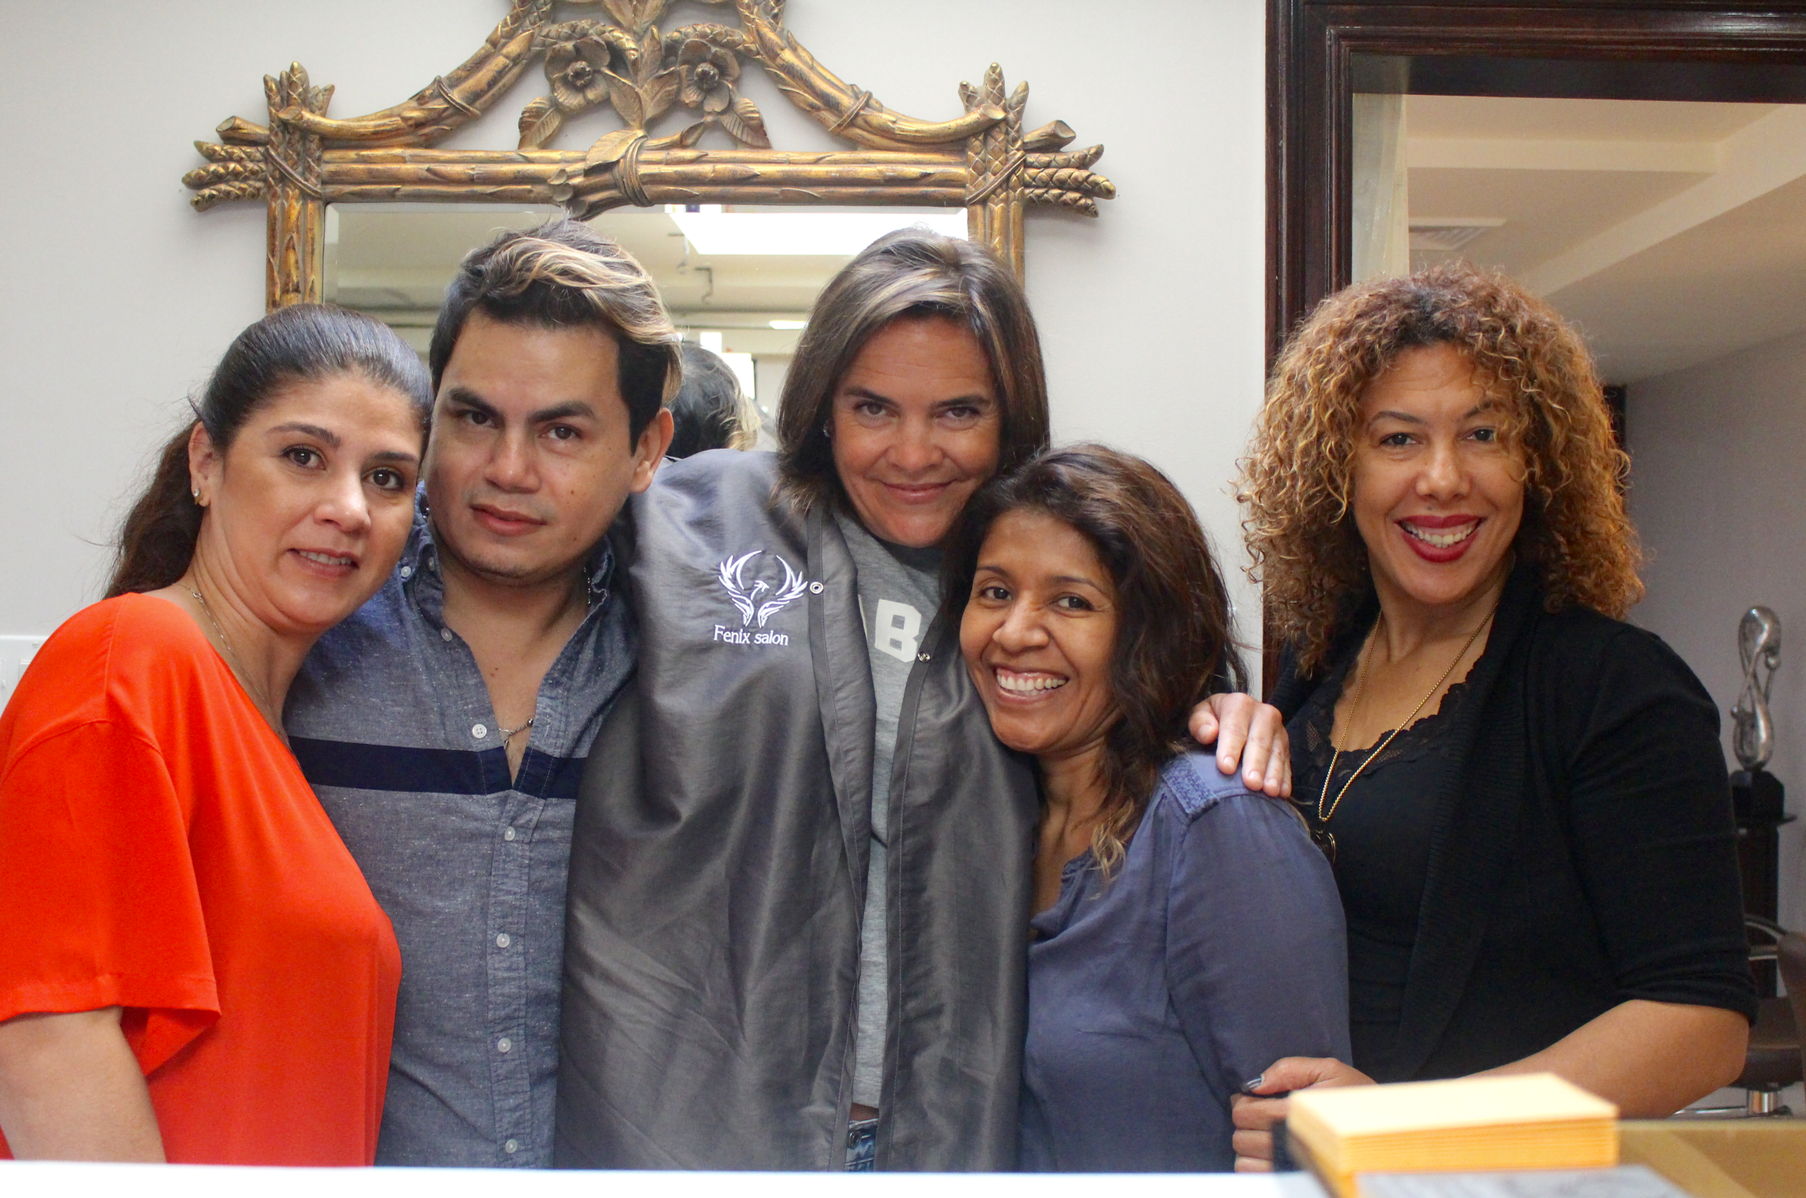 Cindy Moss with the staff at Fenix Salon, Alexandra, John, Sandra and Bella